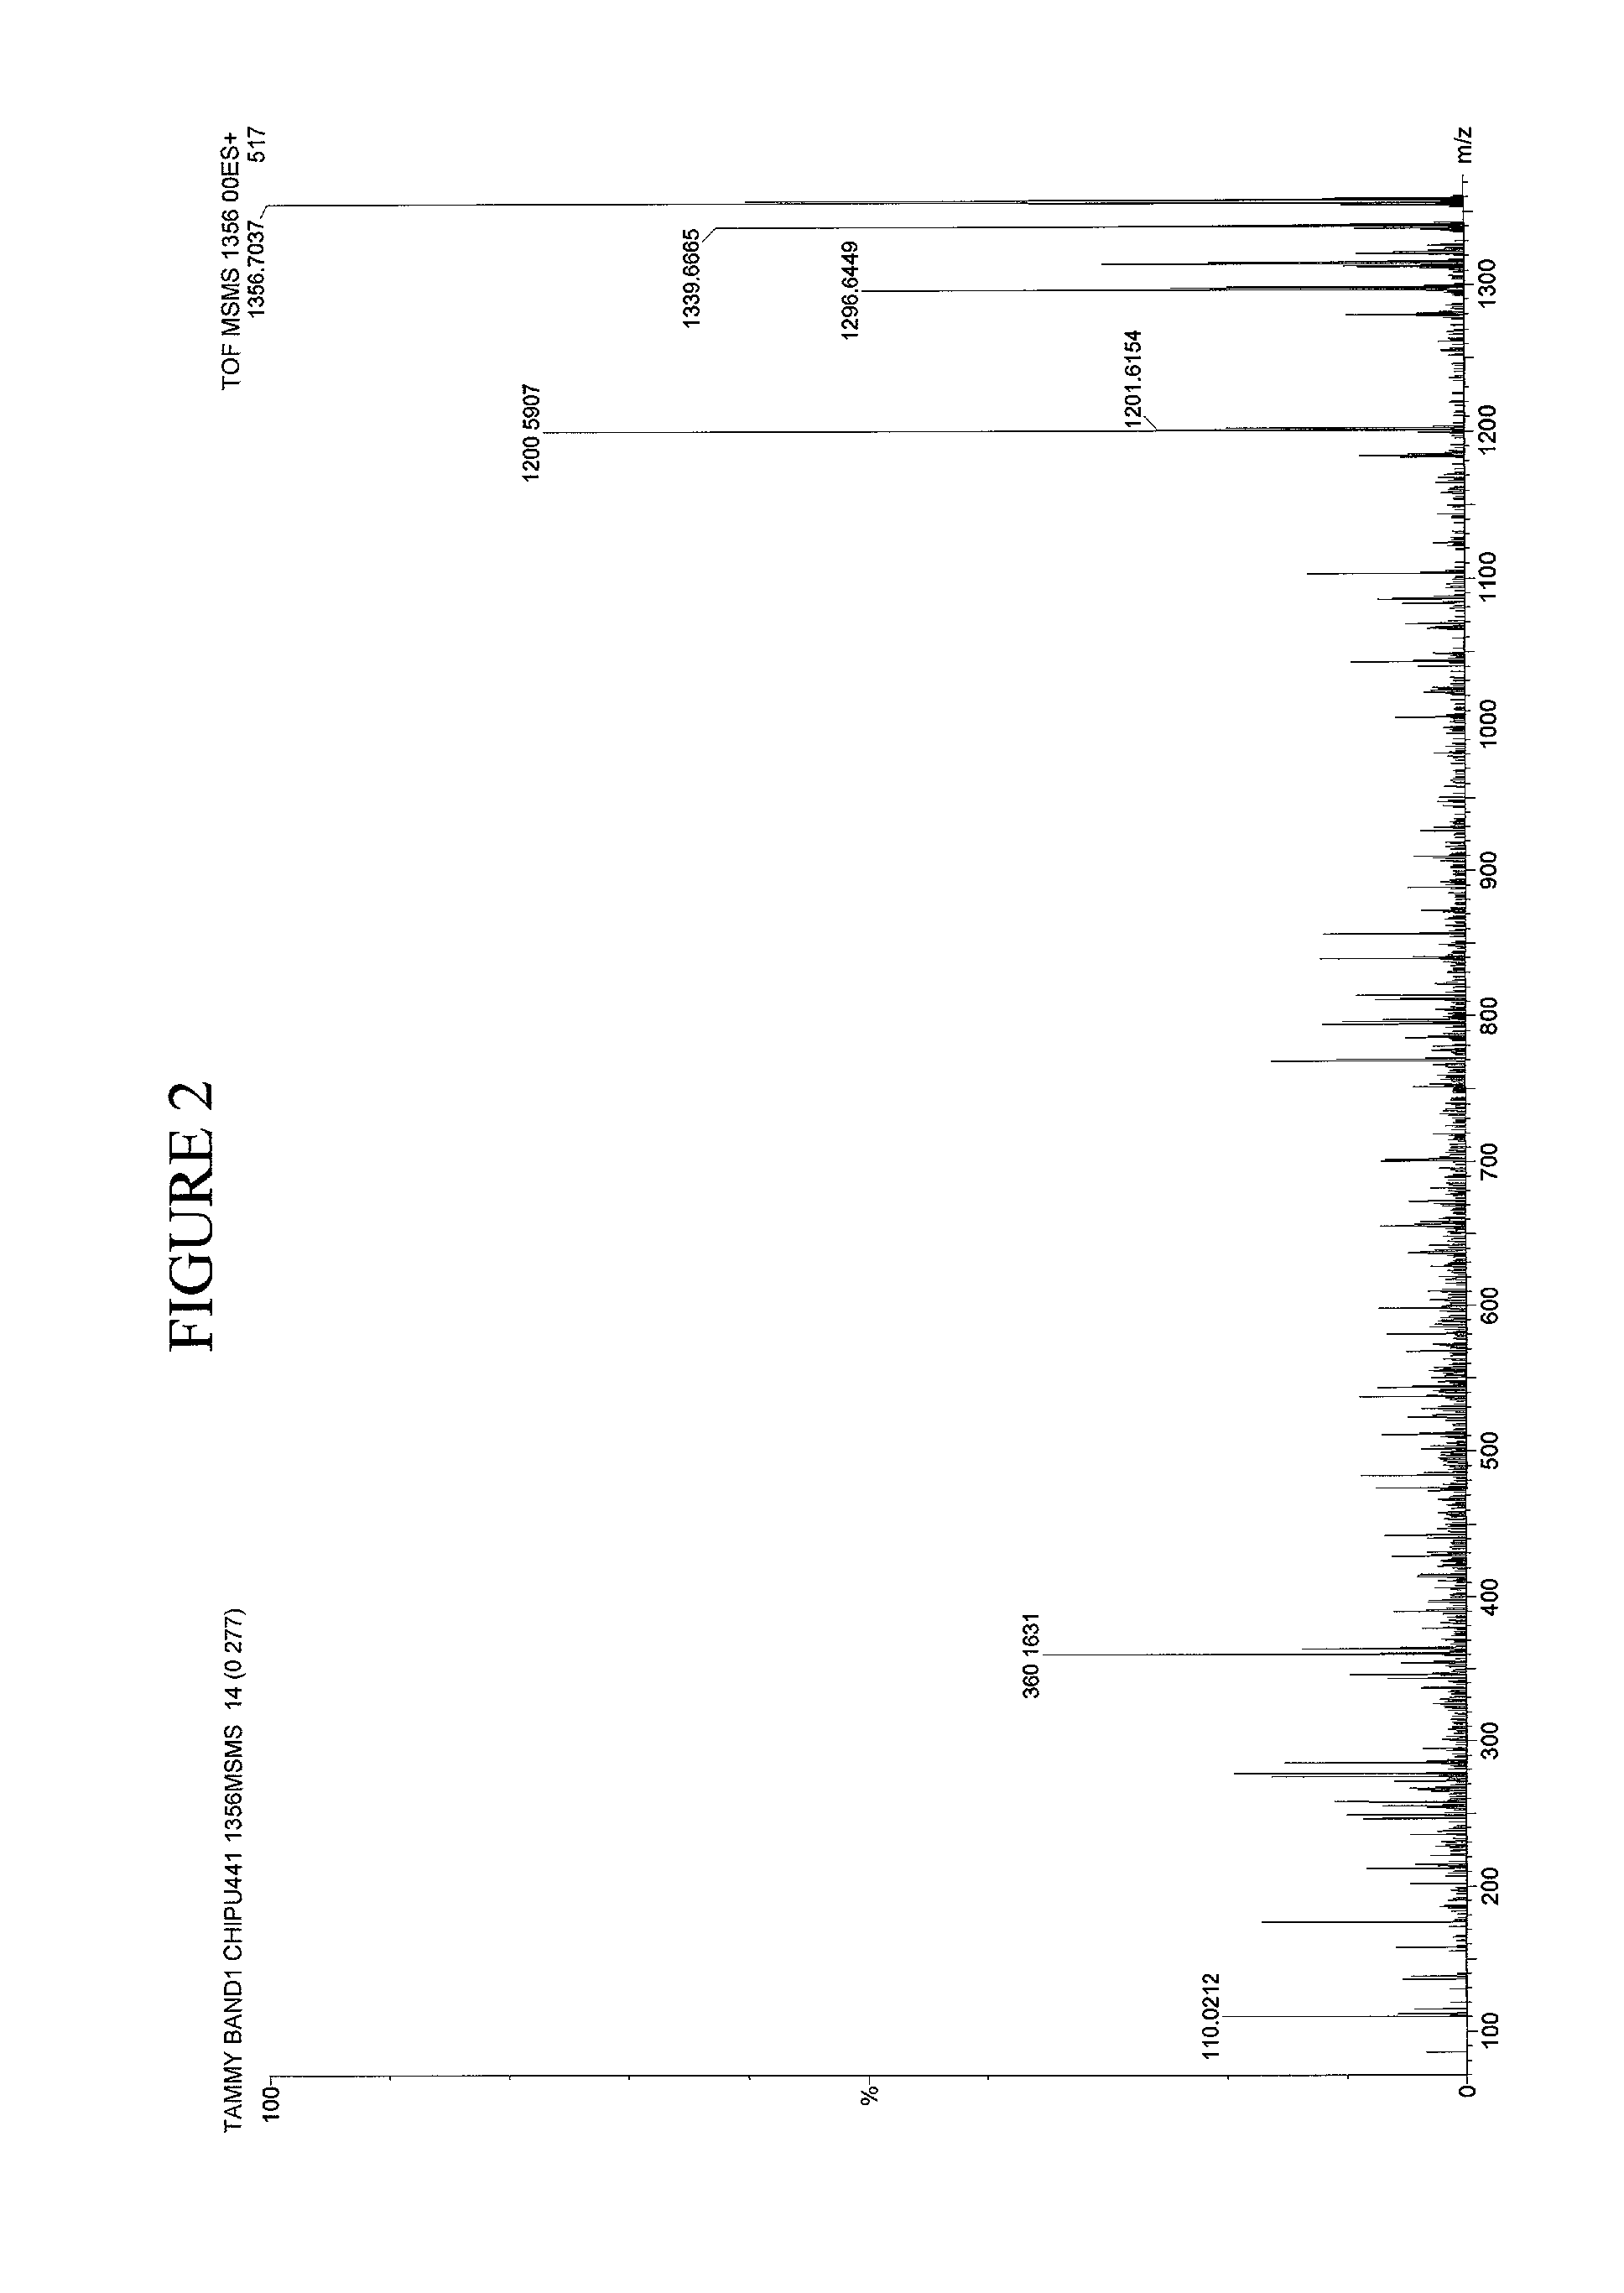 Fibronectin biopolymer marker indicative of insulin resistance